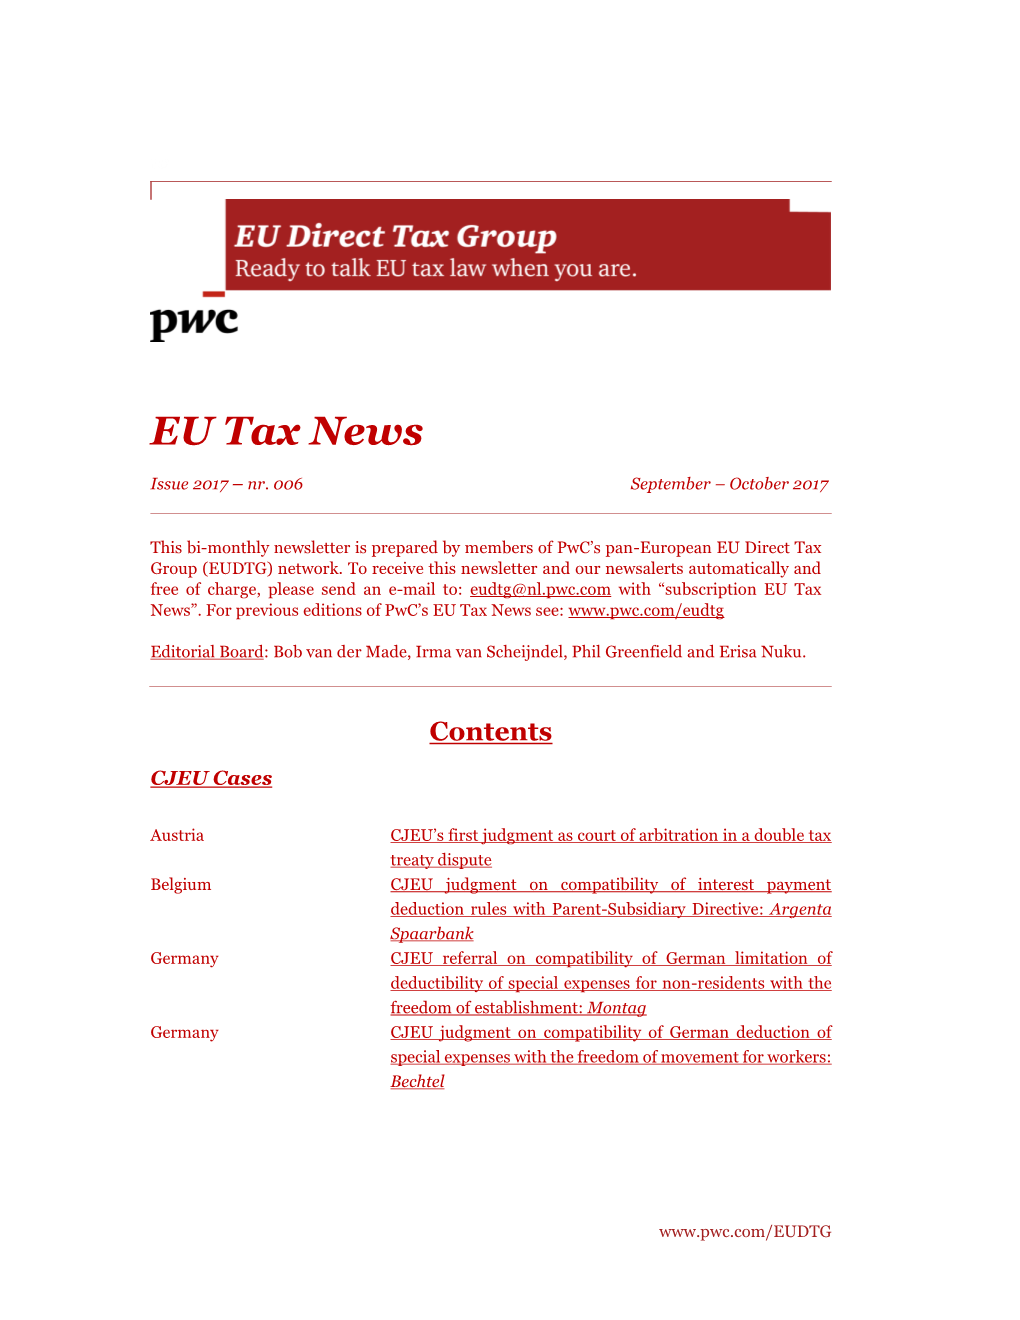 EU Tax News Issue 2017 – Nr. 006 September